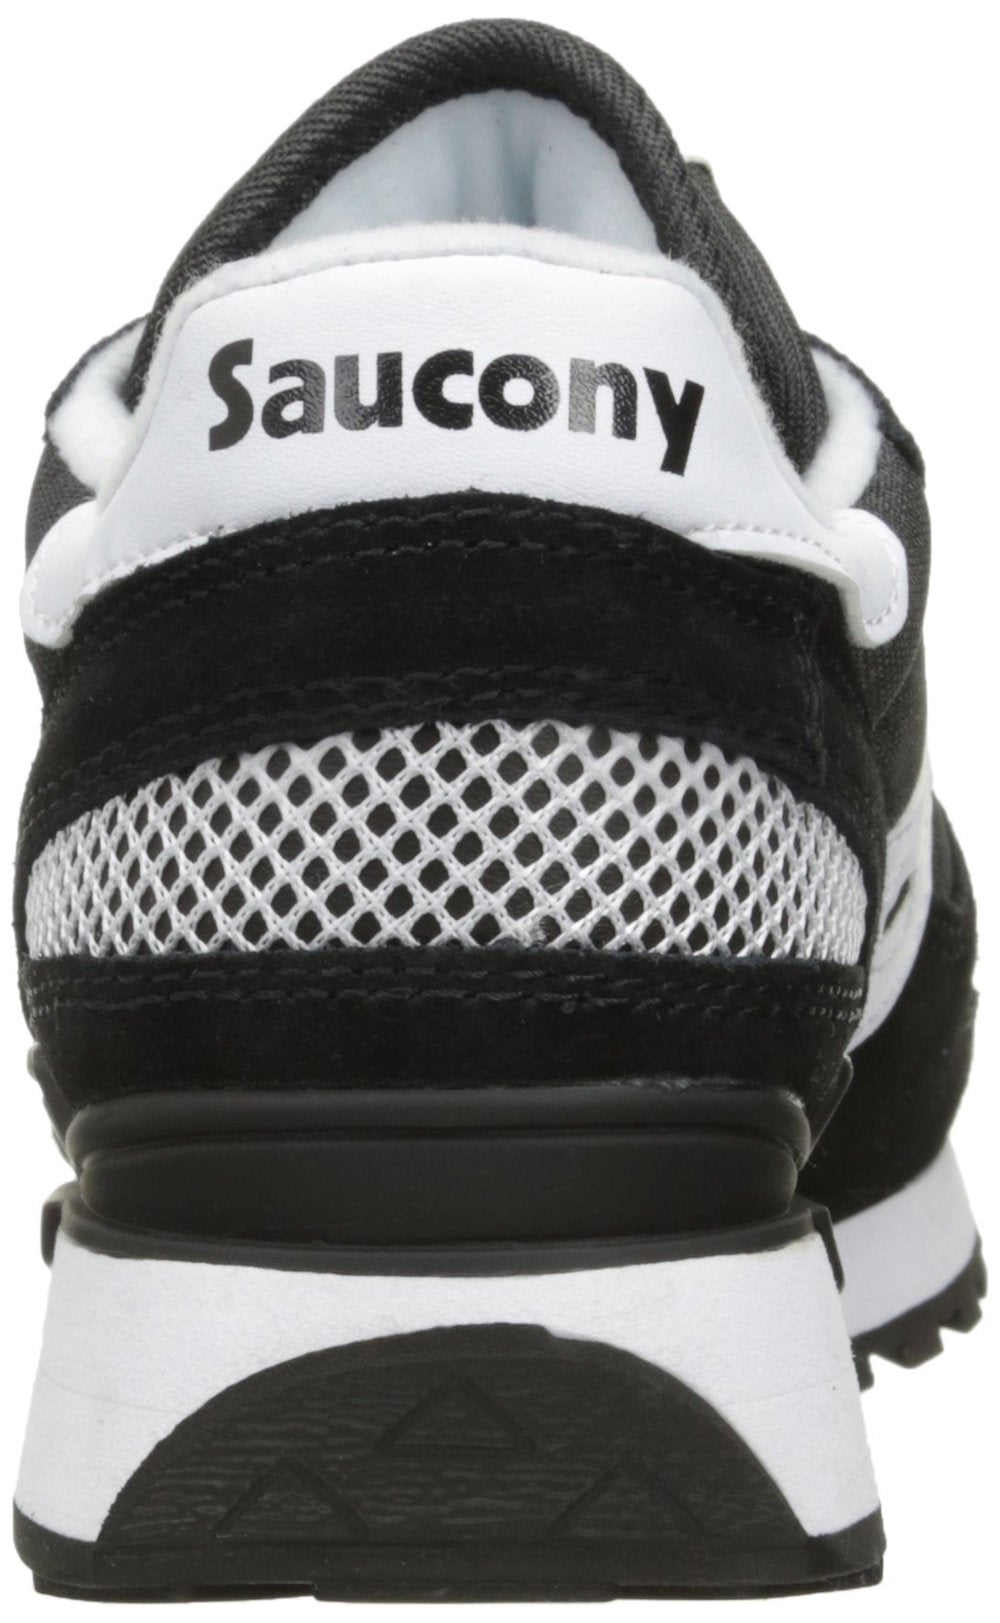 Saucony Shadow Original Black/White Men's Running Shoes 2108-518